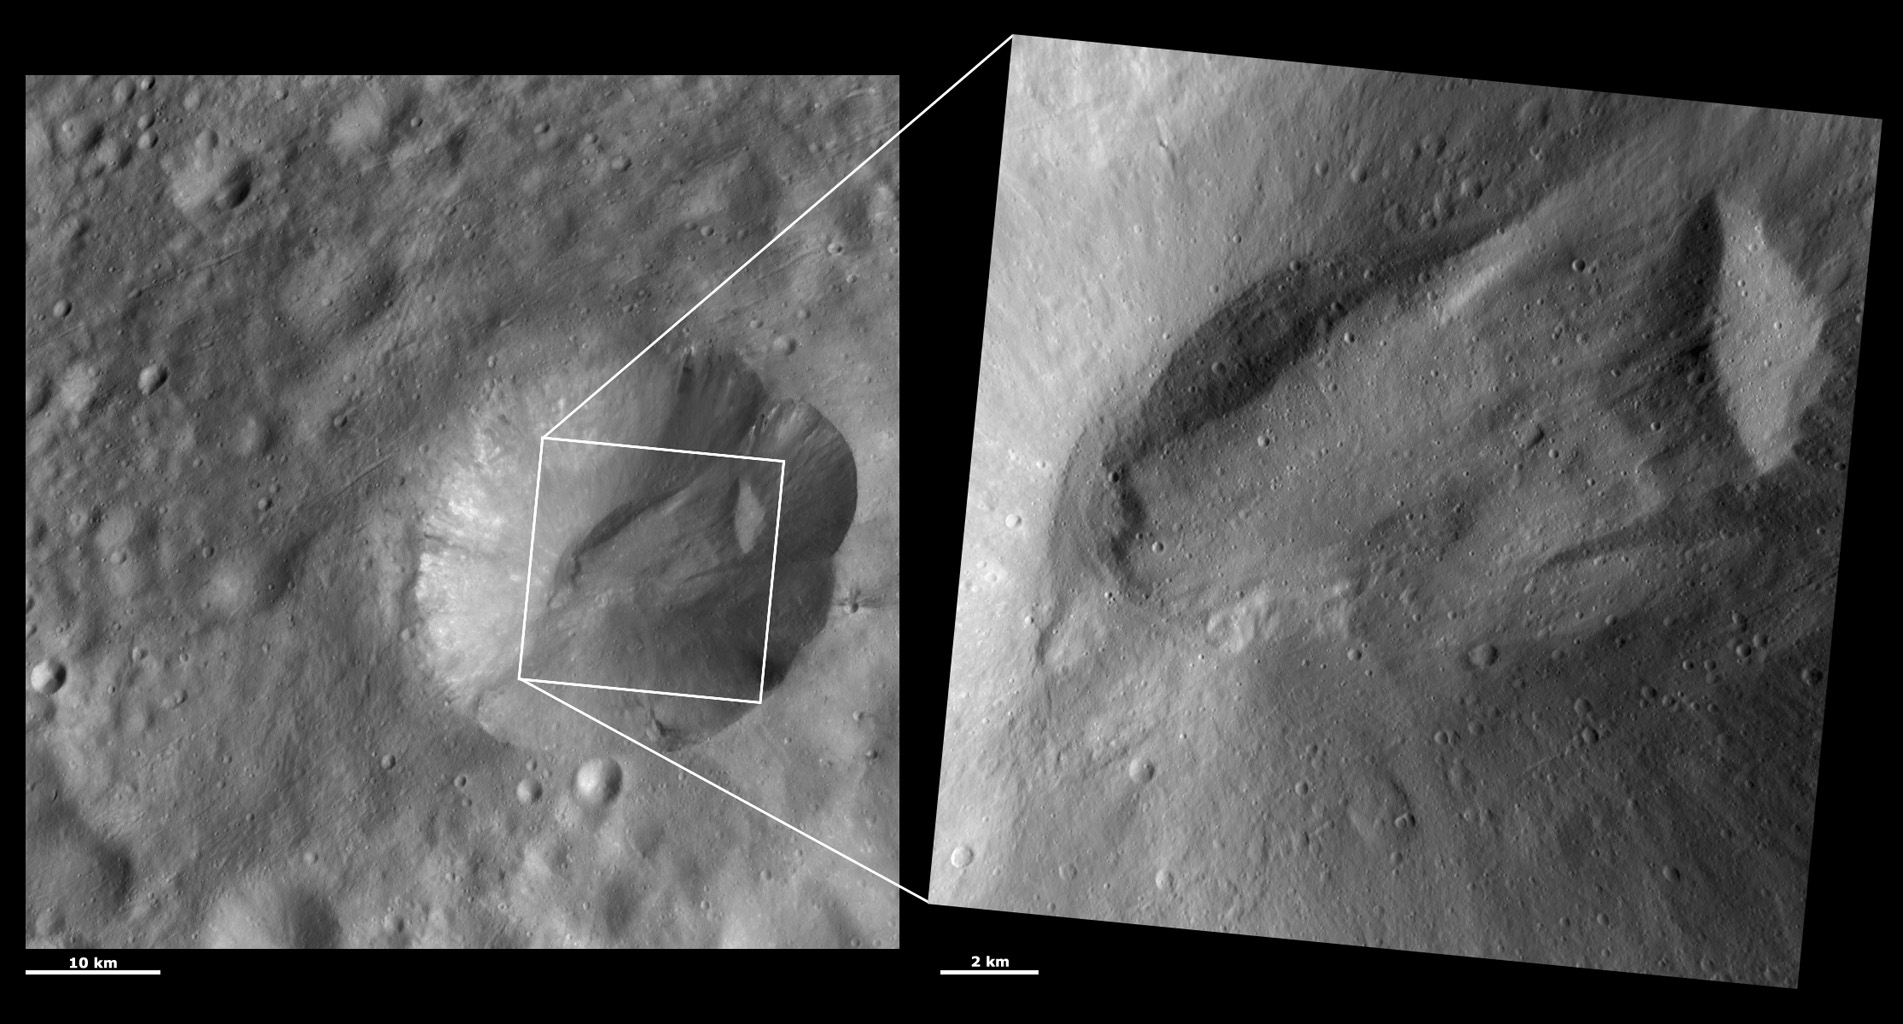 HAMO and LAMO Images of Octavia Crater